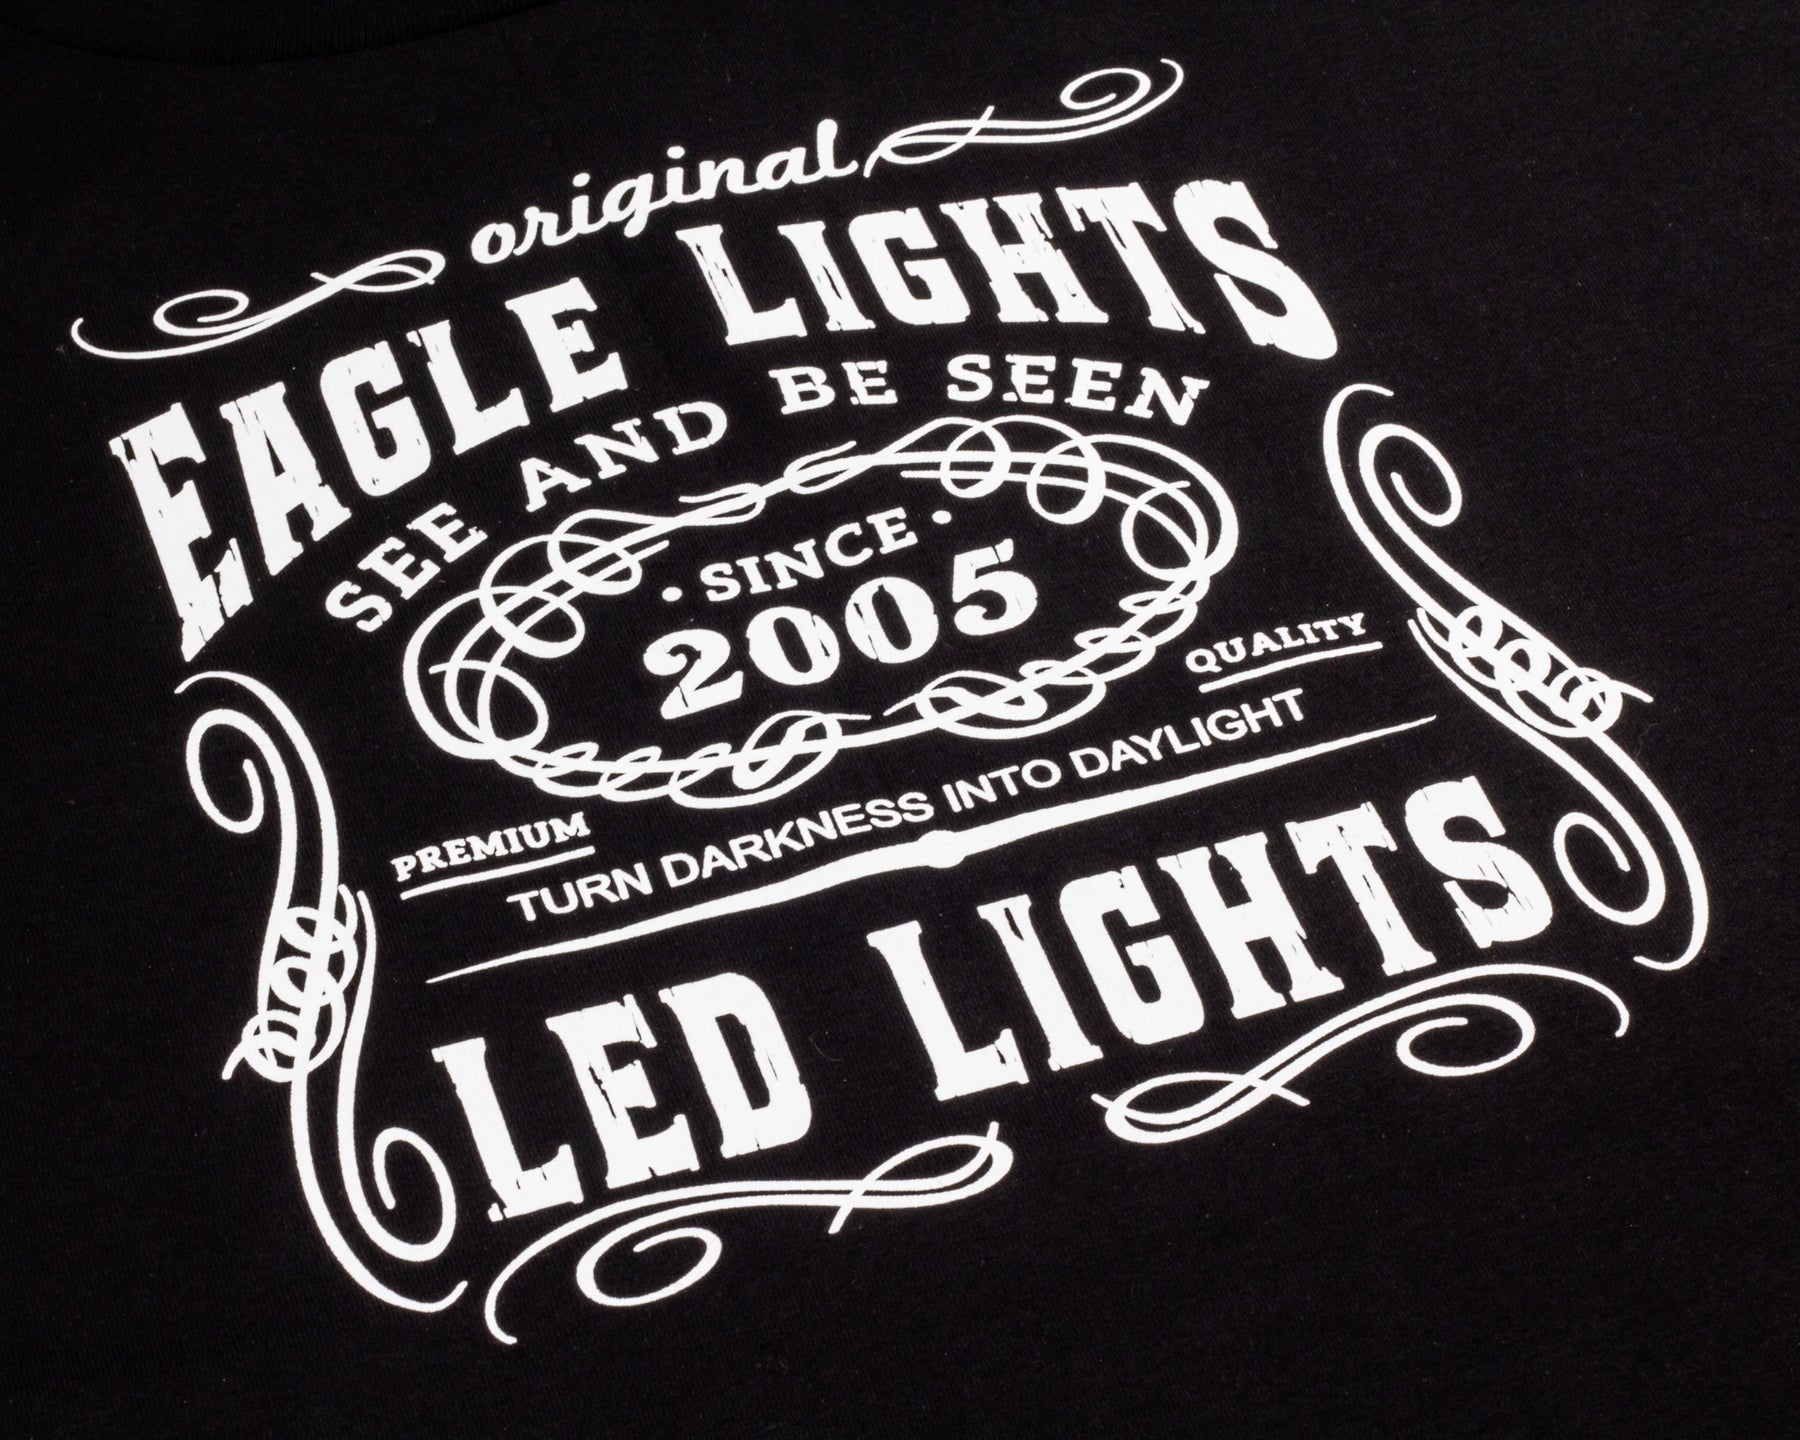 Eagle Lights T-Shirt with Lynchburg Graphic